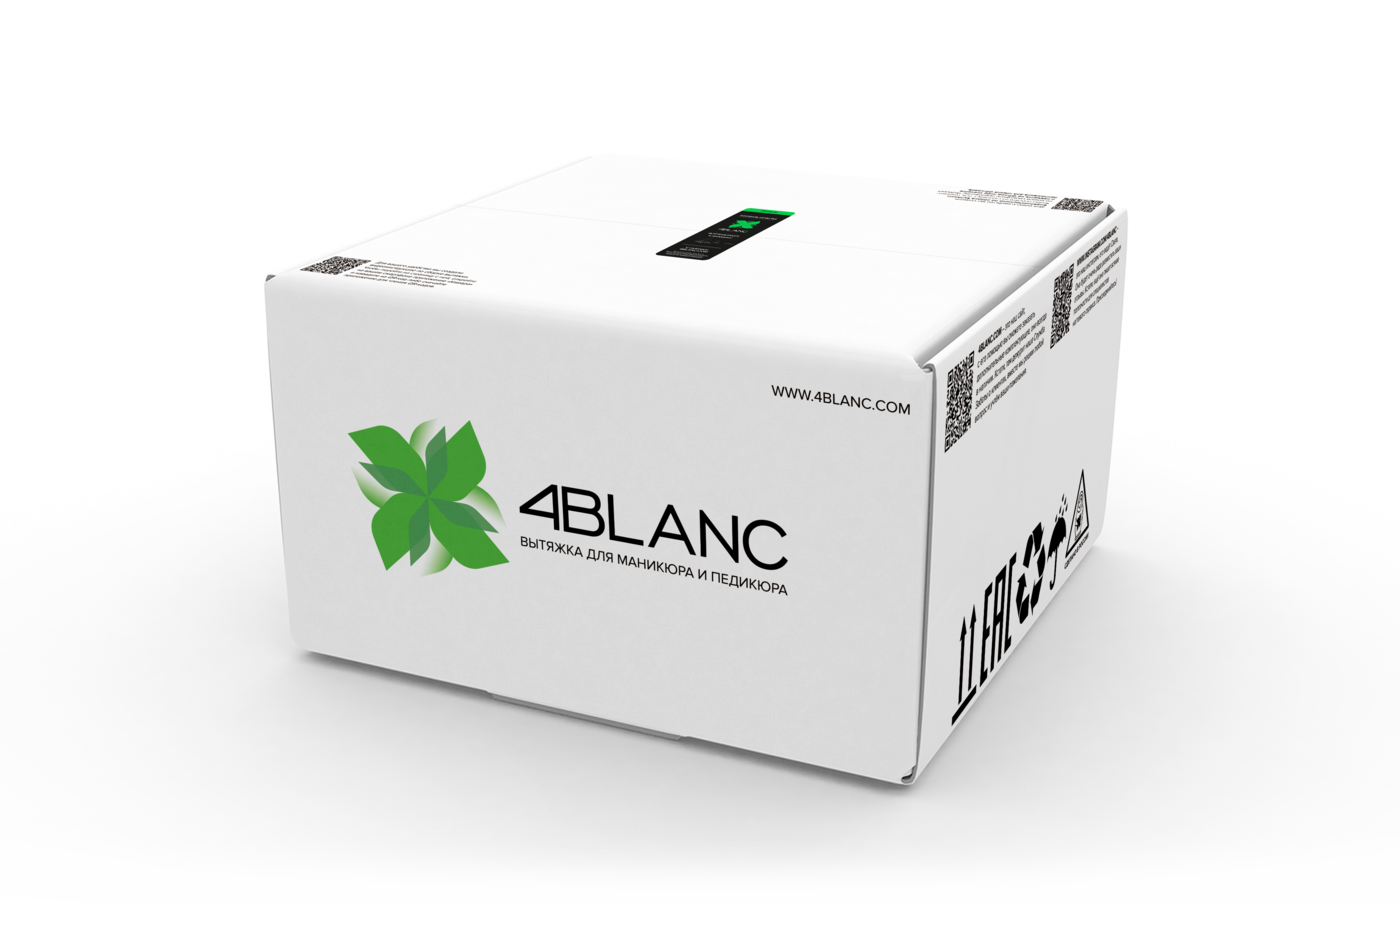 4blanc Alize. Вытяжка 4blanc. Вытяжка 4 Blanc Pro. 4blanc вытяжка для маникюра и педикюра.